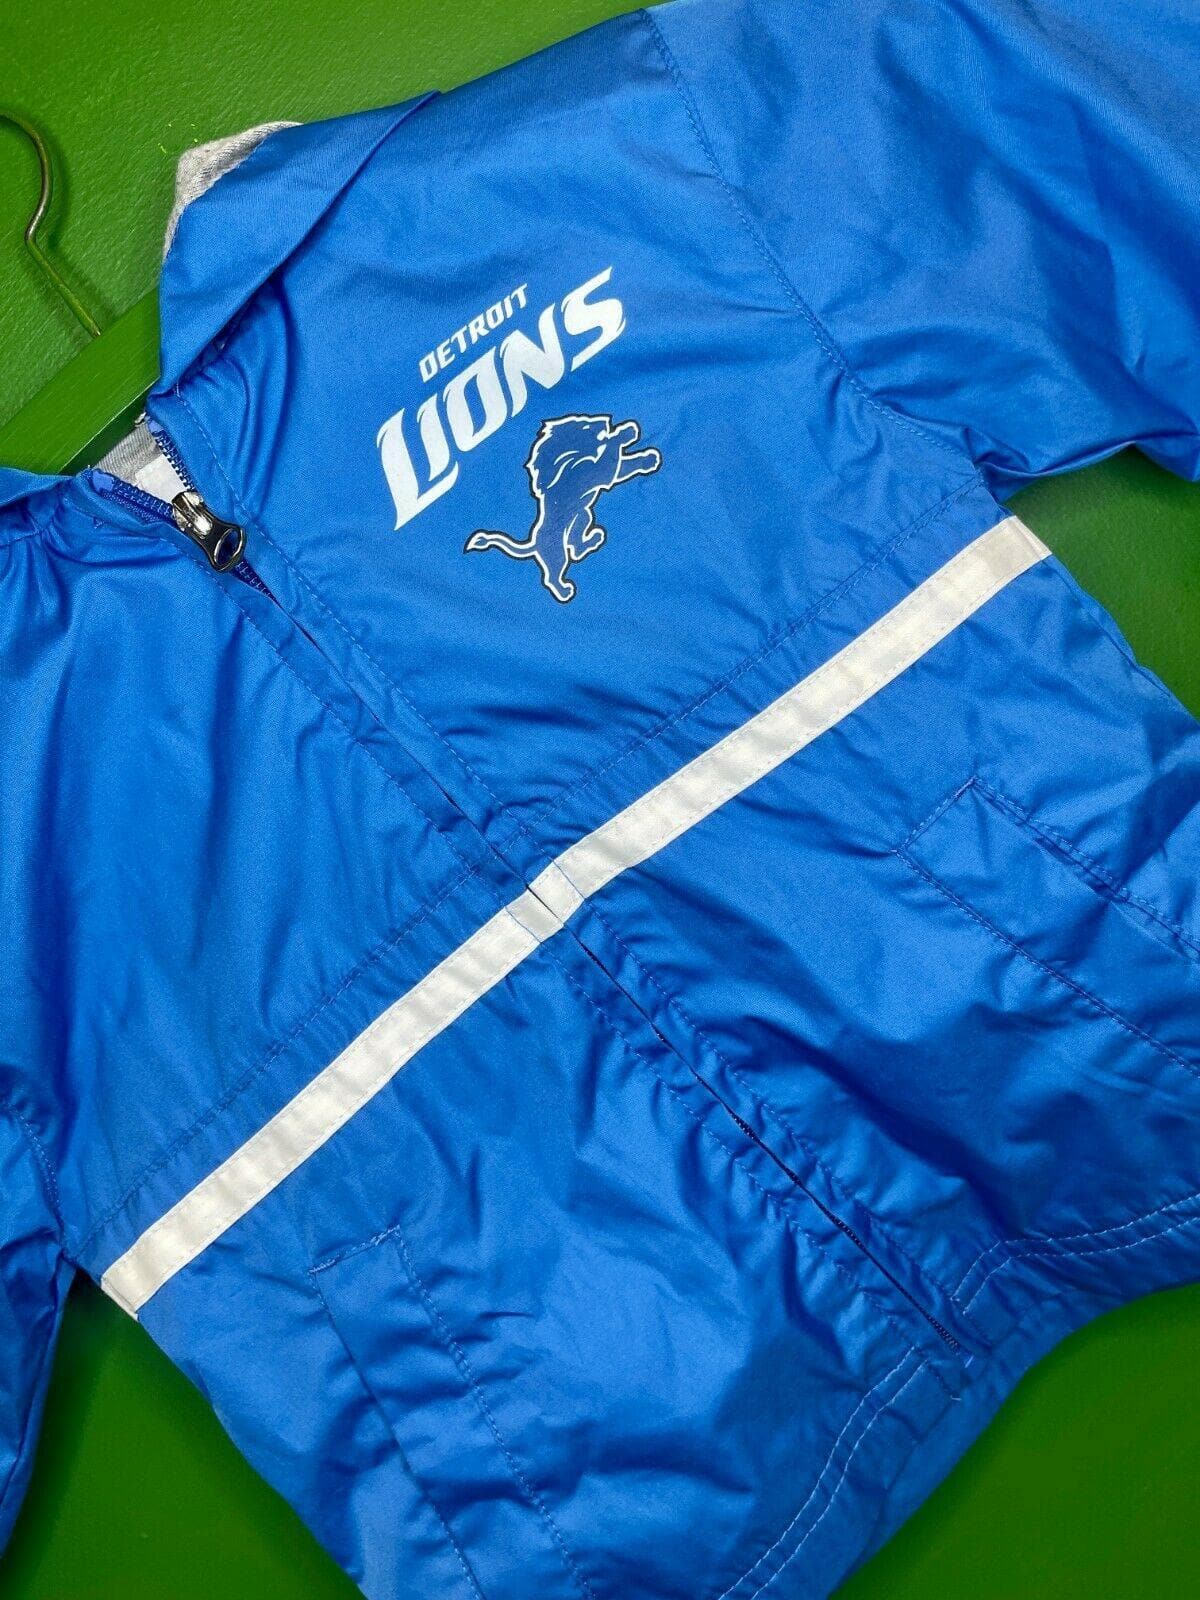 NFL Detroit Lions Windbreaker Jacket  Toddler 2T